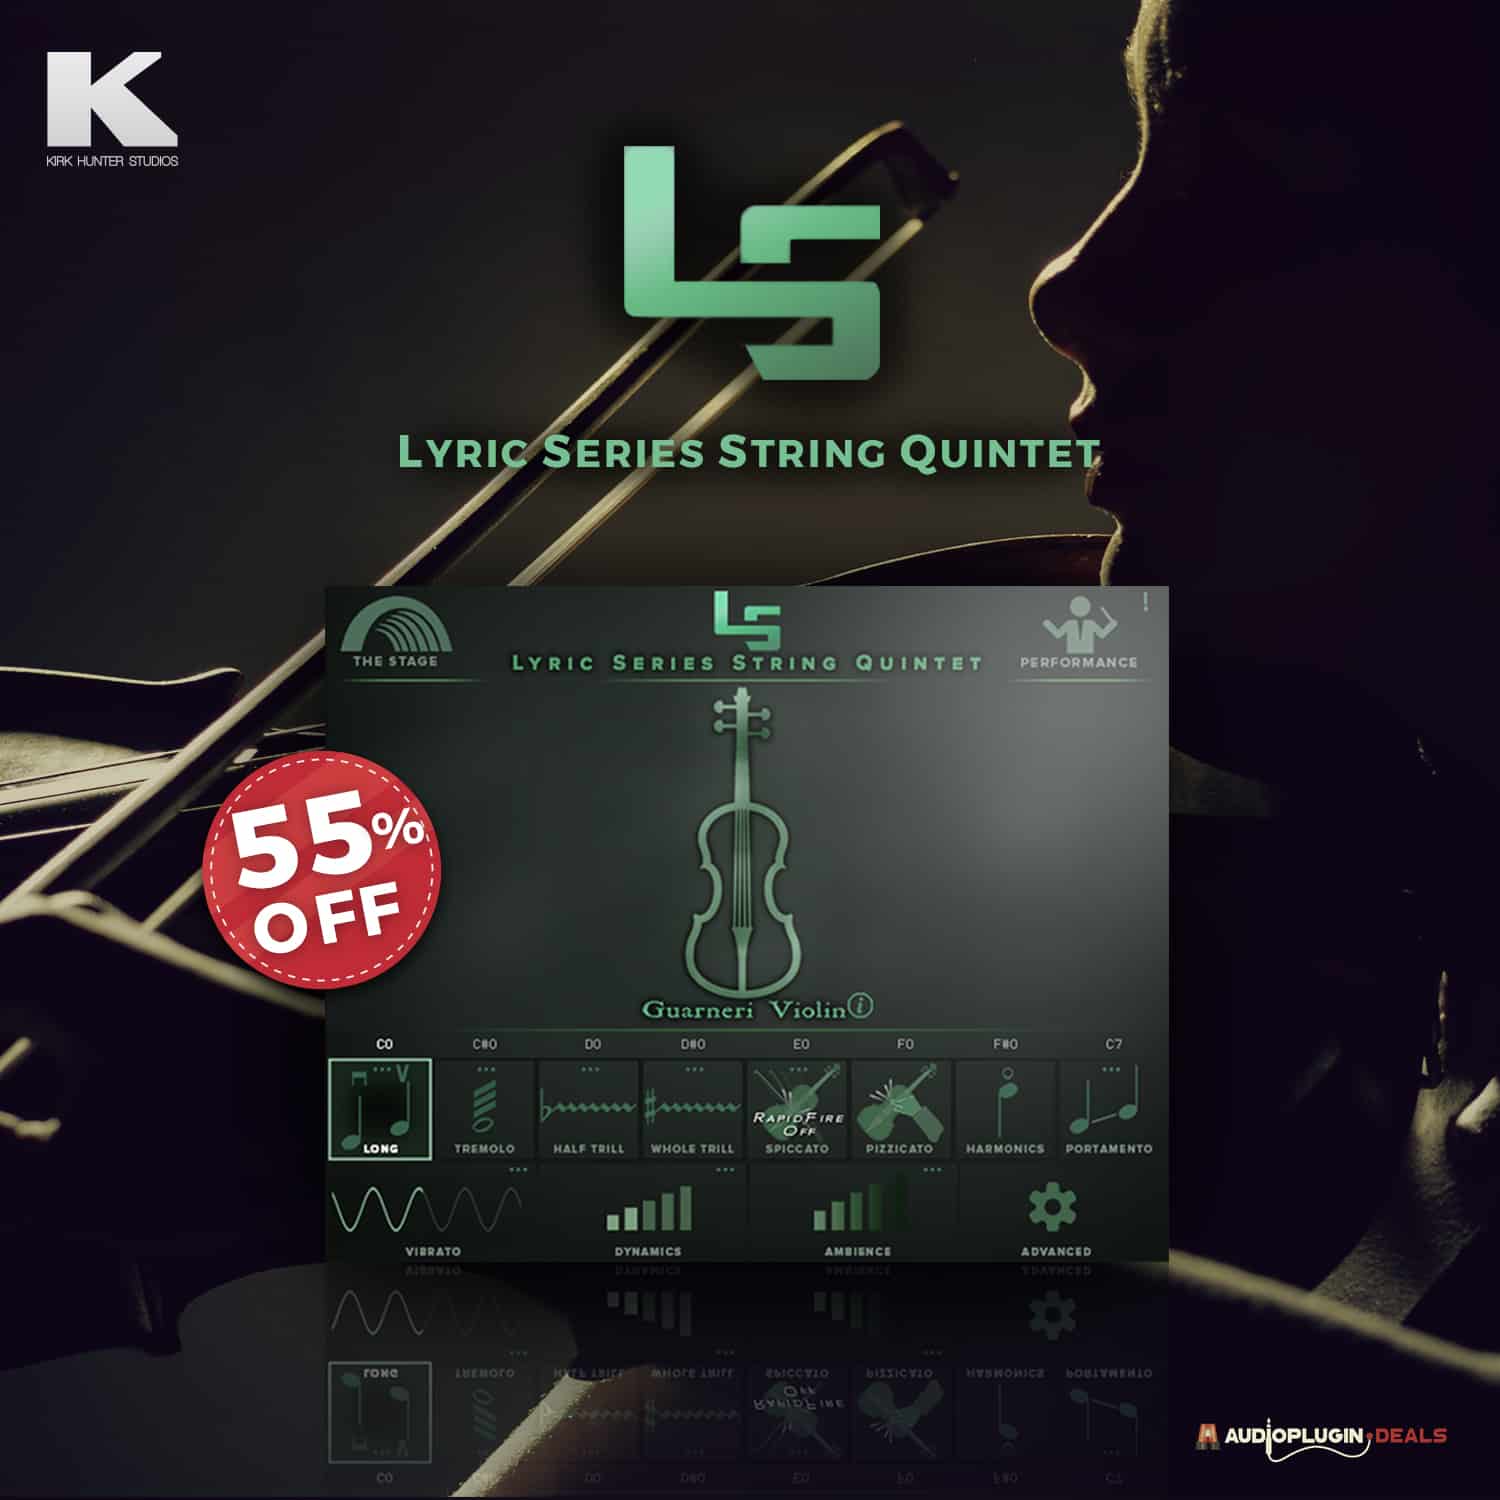 Lyric Series String Quintet by Kirk Hunter Studios